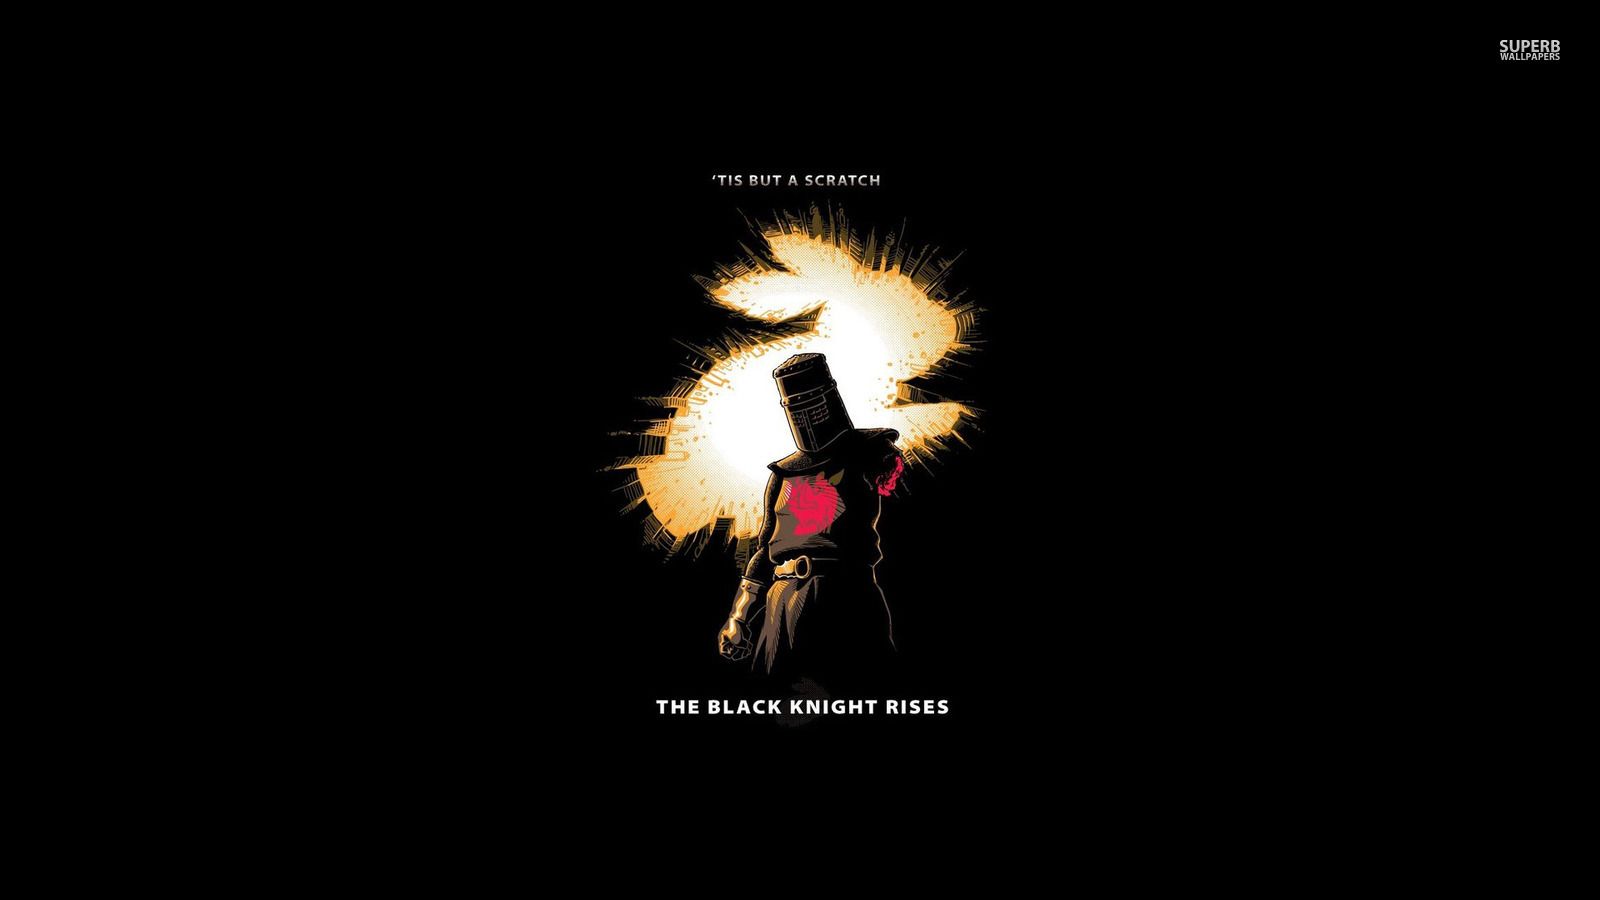 The Black Knight Rises - Monty Python Wallpaper (38685246) - Fanpop